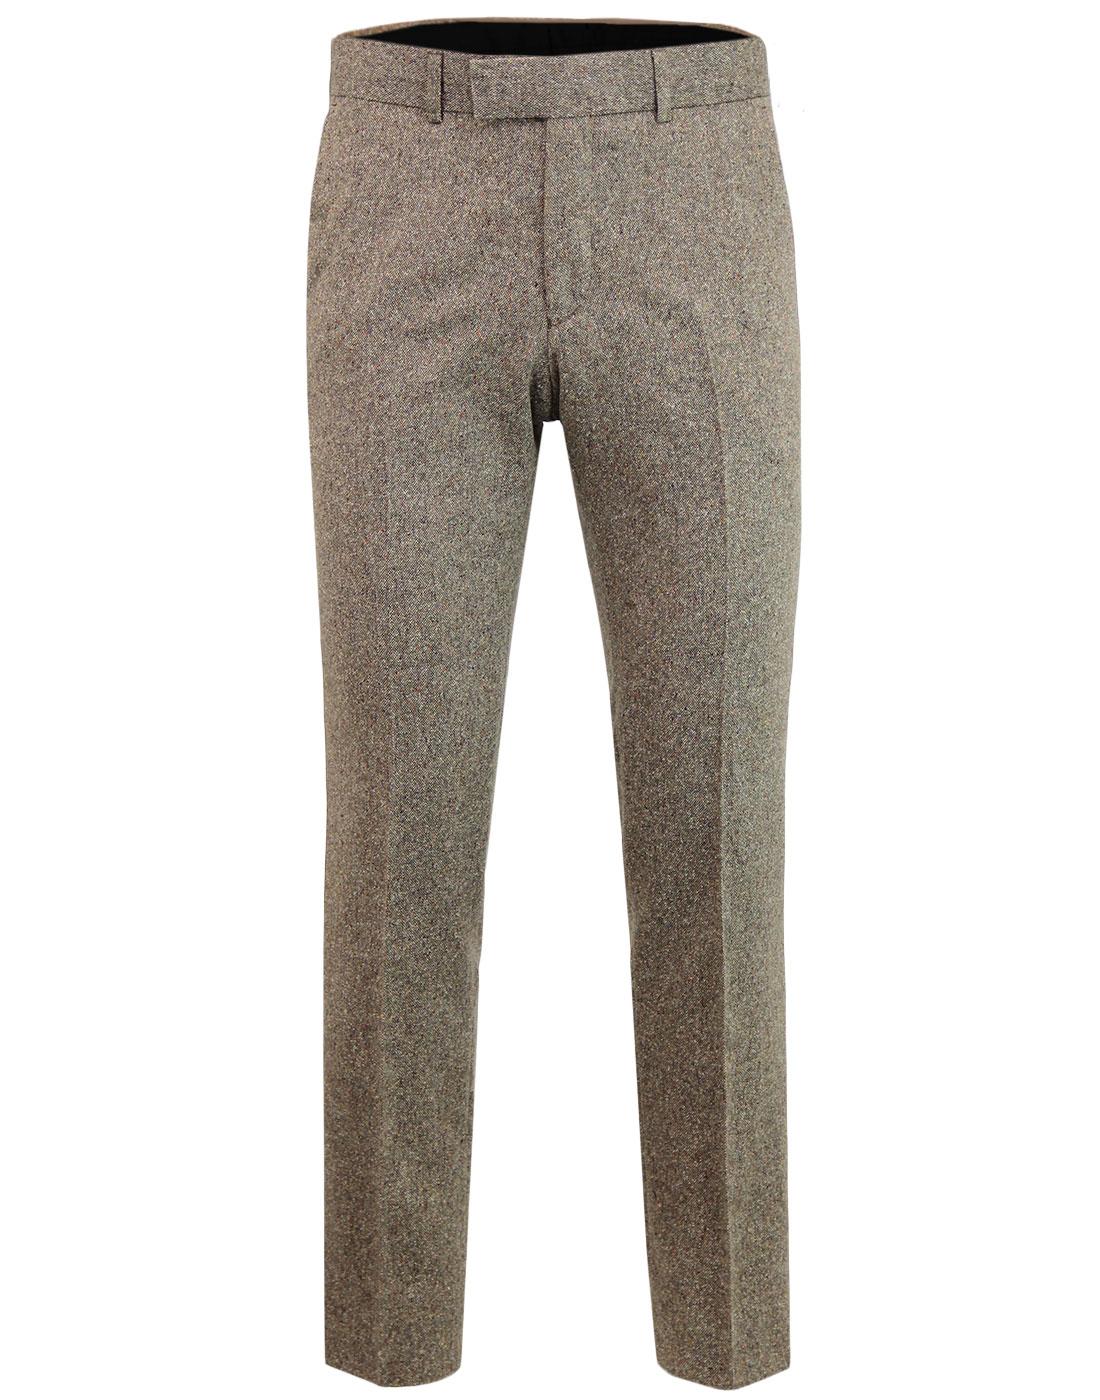 Retro Mod Donegal Fleck Slim Suit Trousers BISCUIT